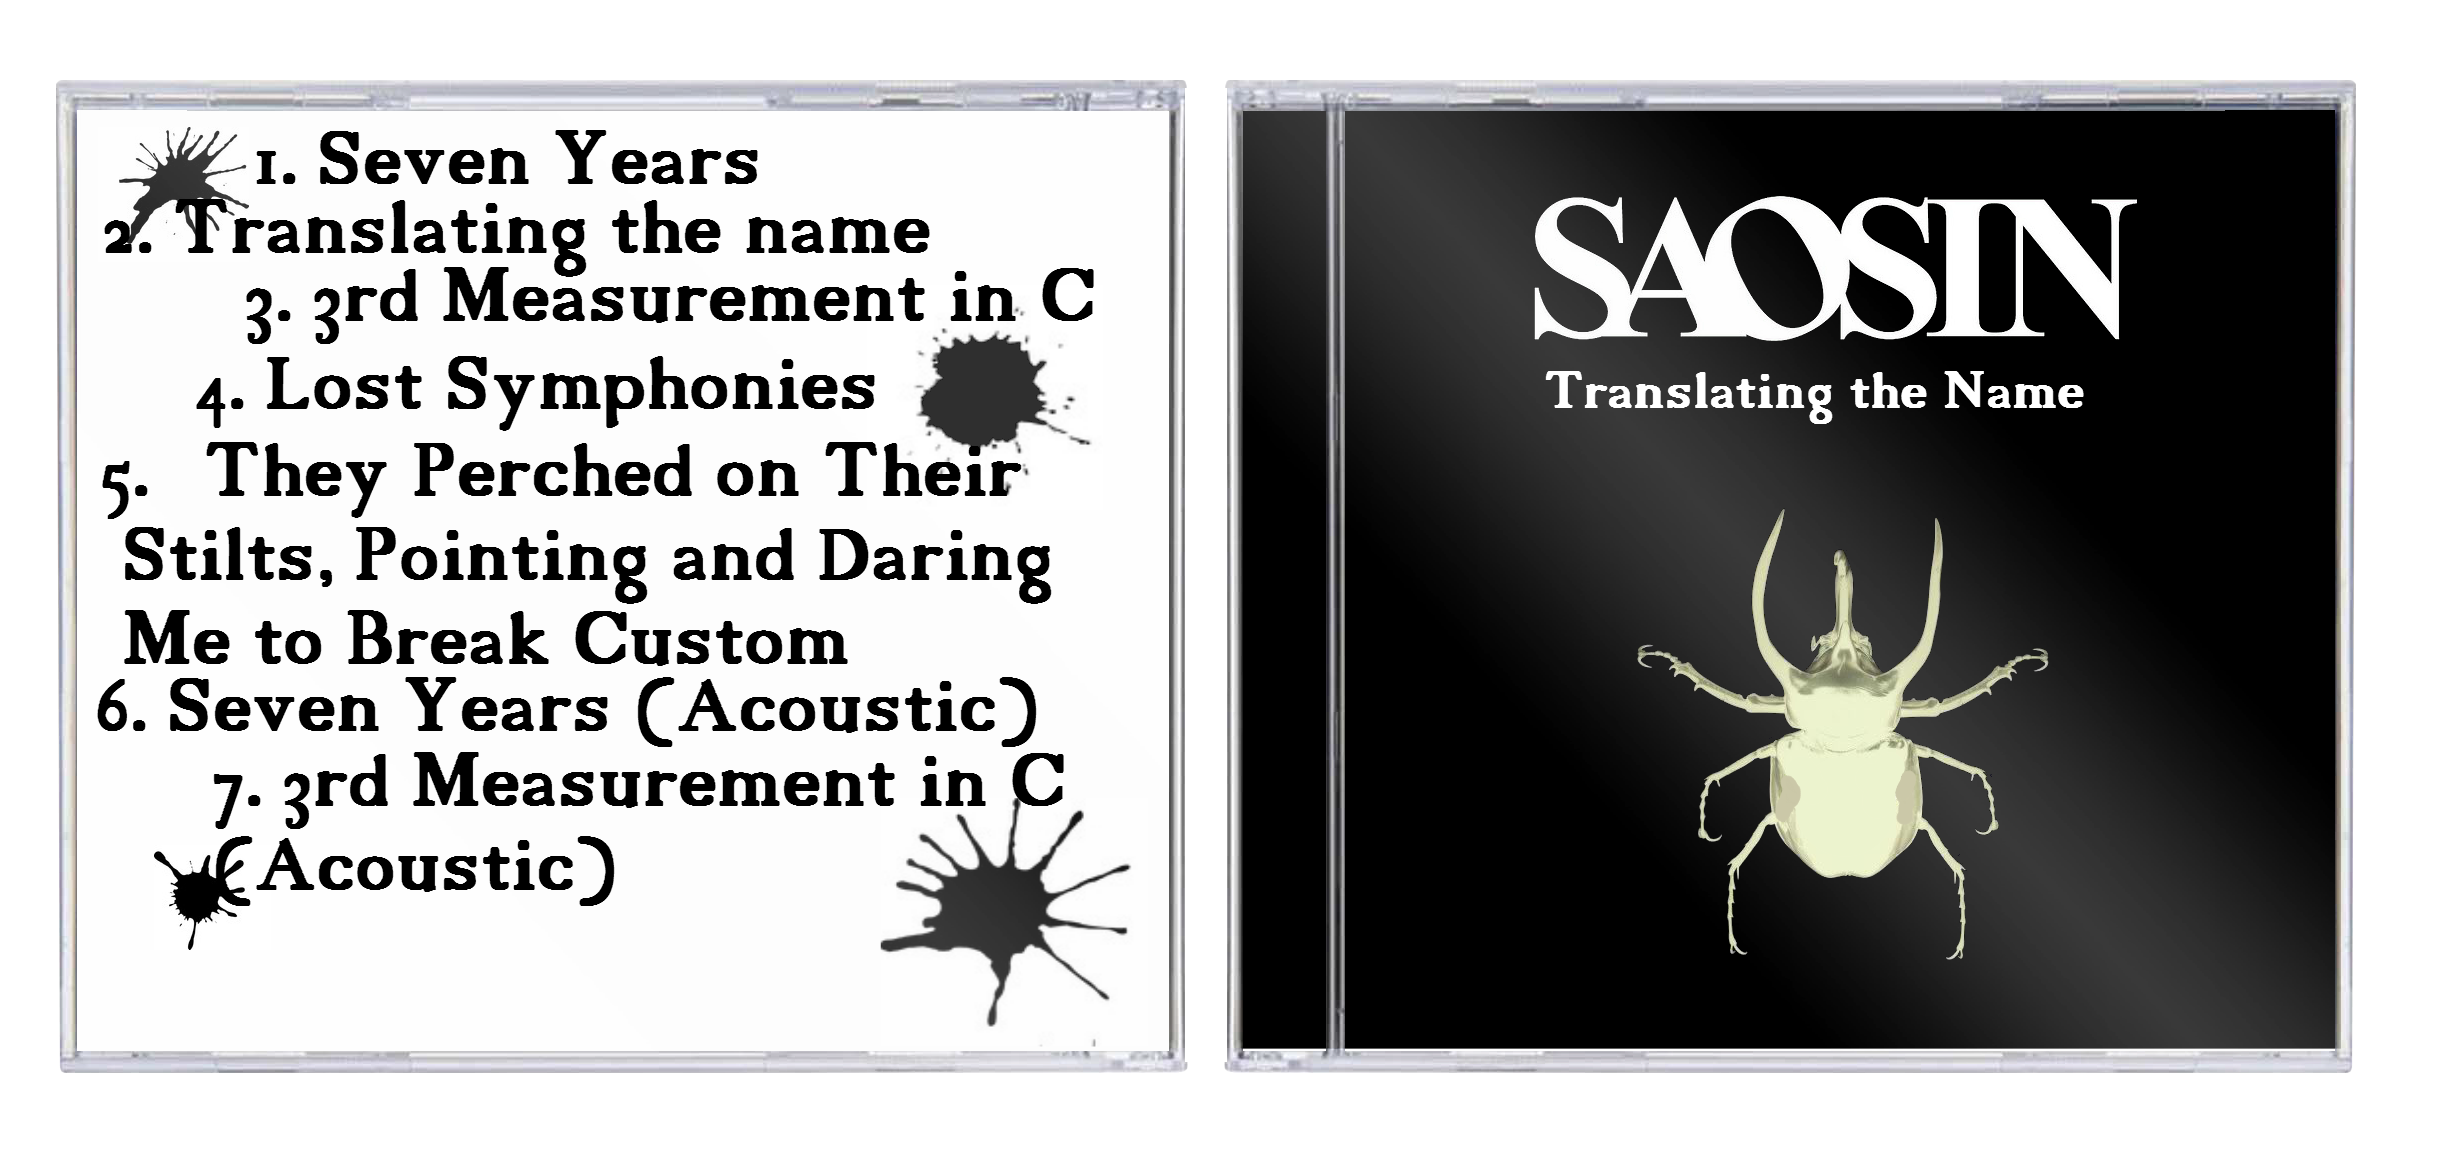 Saosin: Translating The Name EP box cover